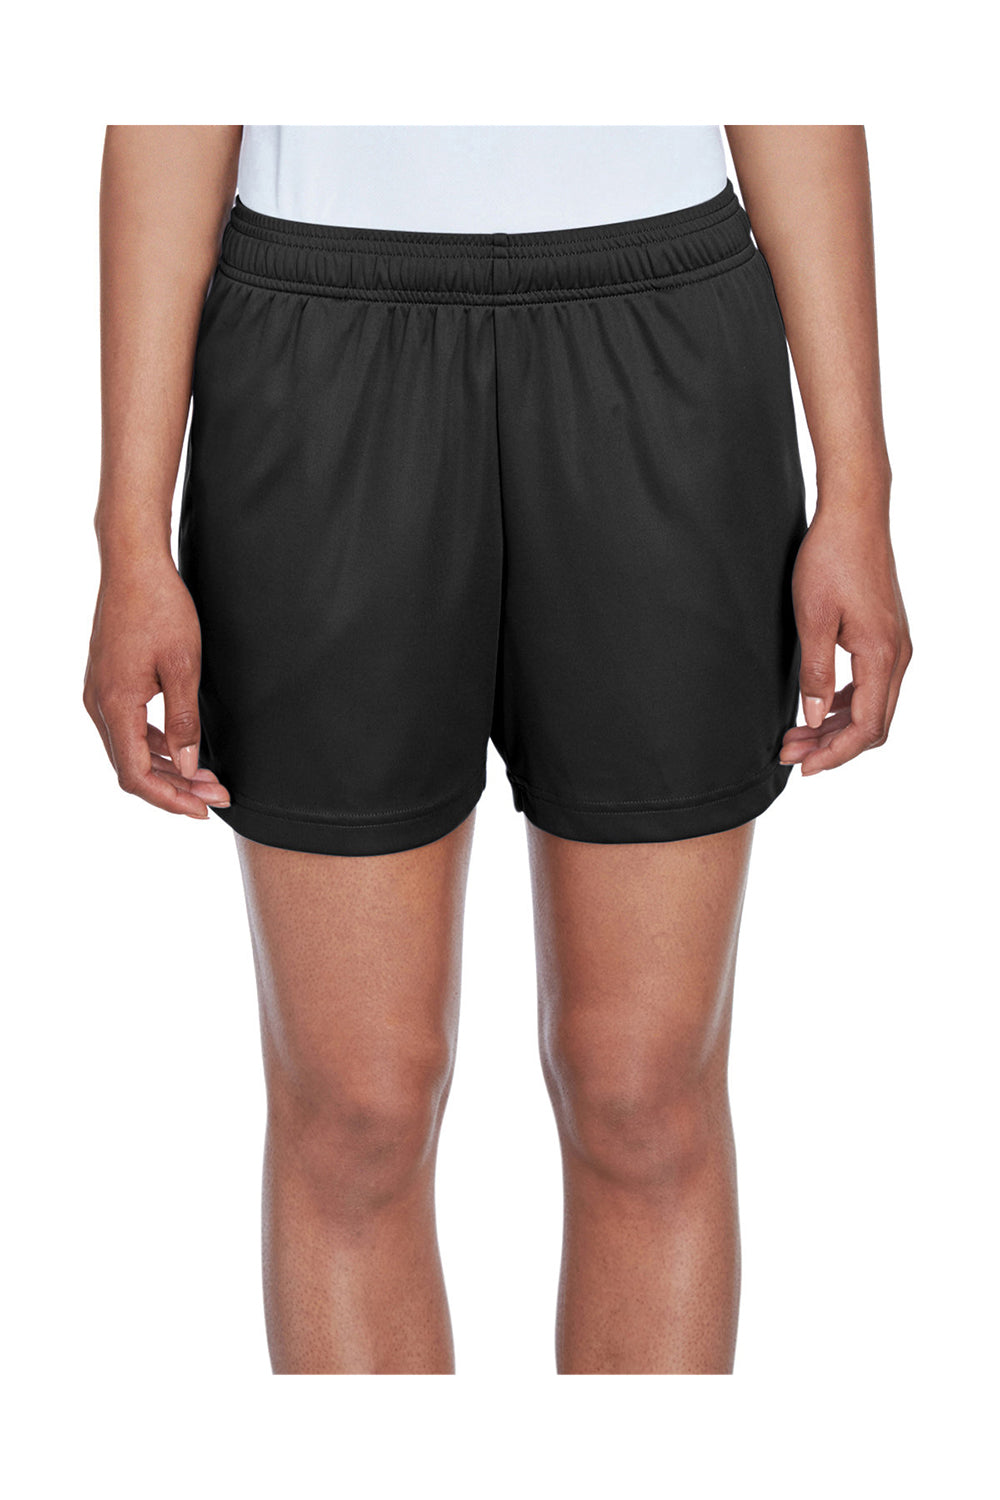 Team 365 TT11SHW Womens Zone Performance Shorts w/ Pockets Black Front